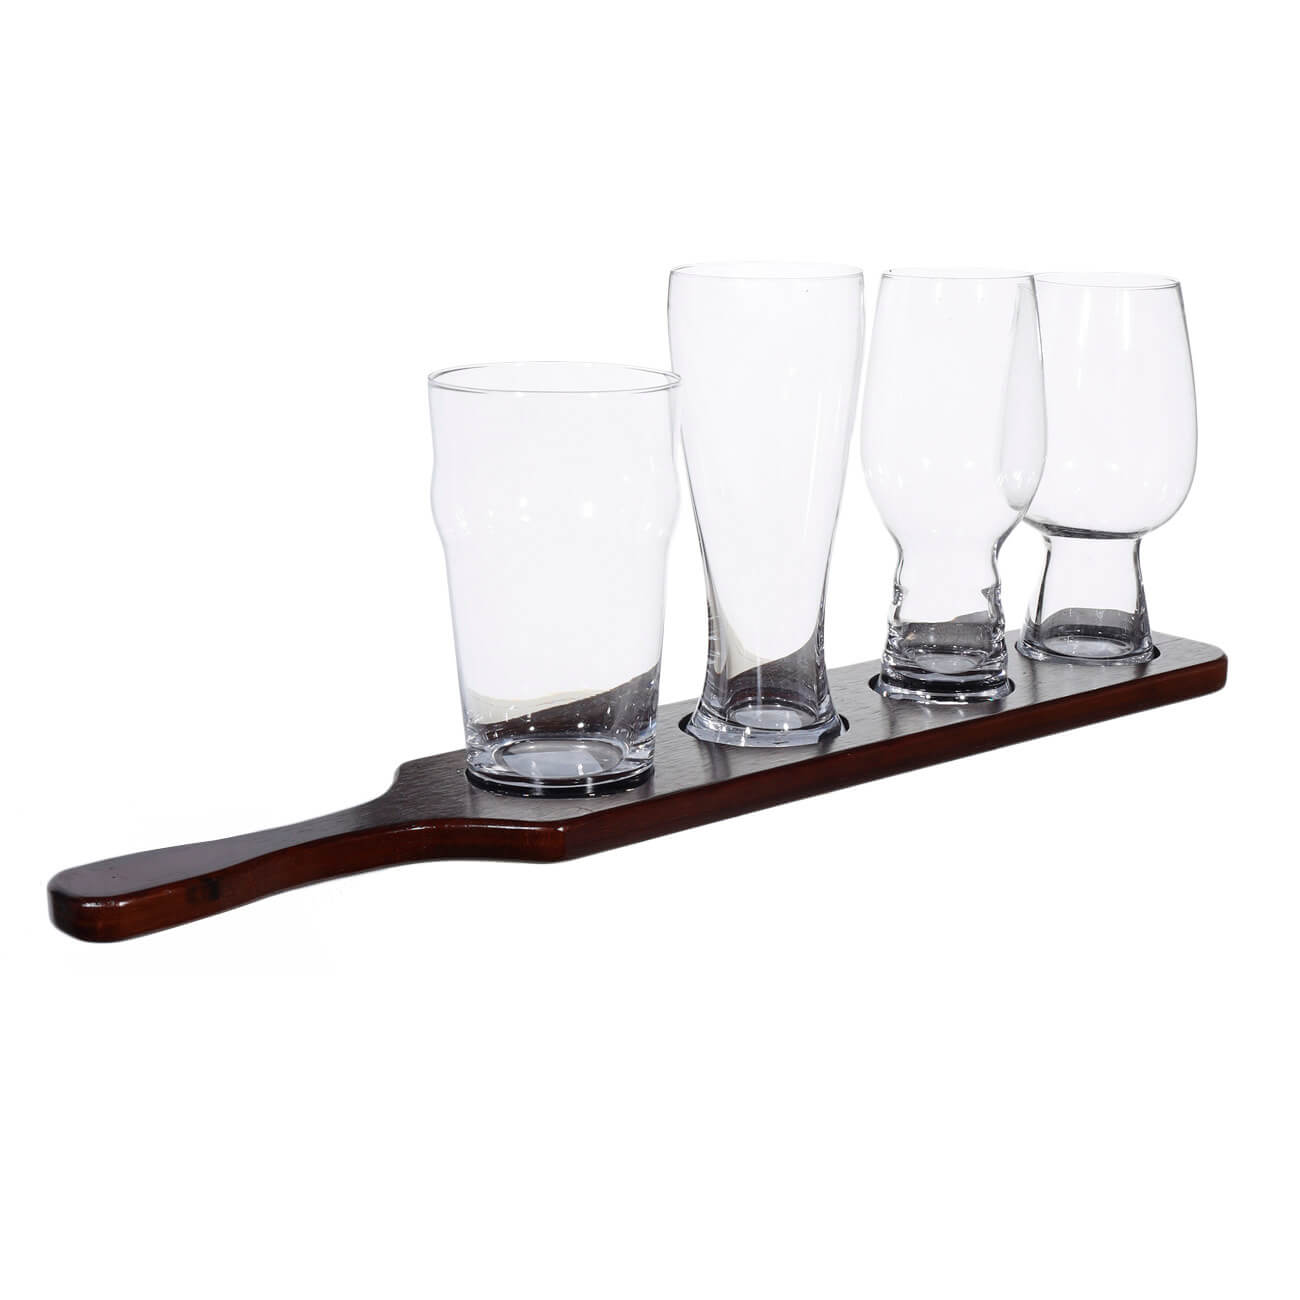 Набор стаканов для пива, 4 шт, на подставке, стекло/дерево, Noble tree набор стаканов 6 шт 310 мл времена года 194 591